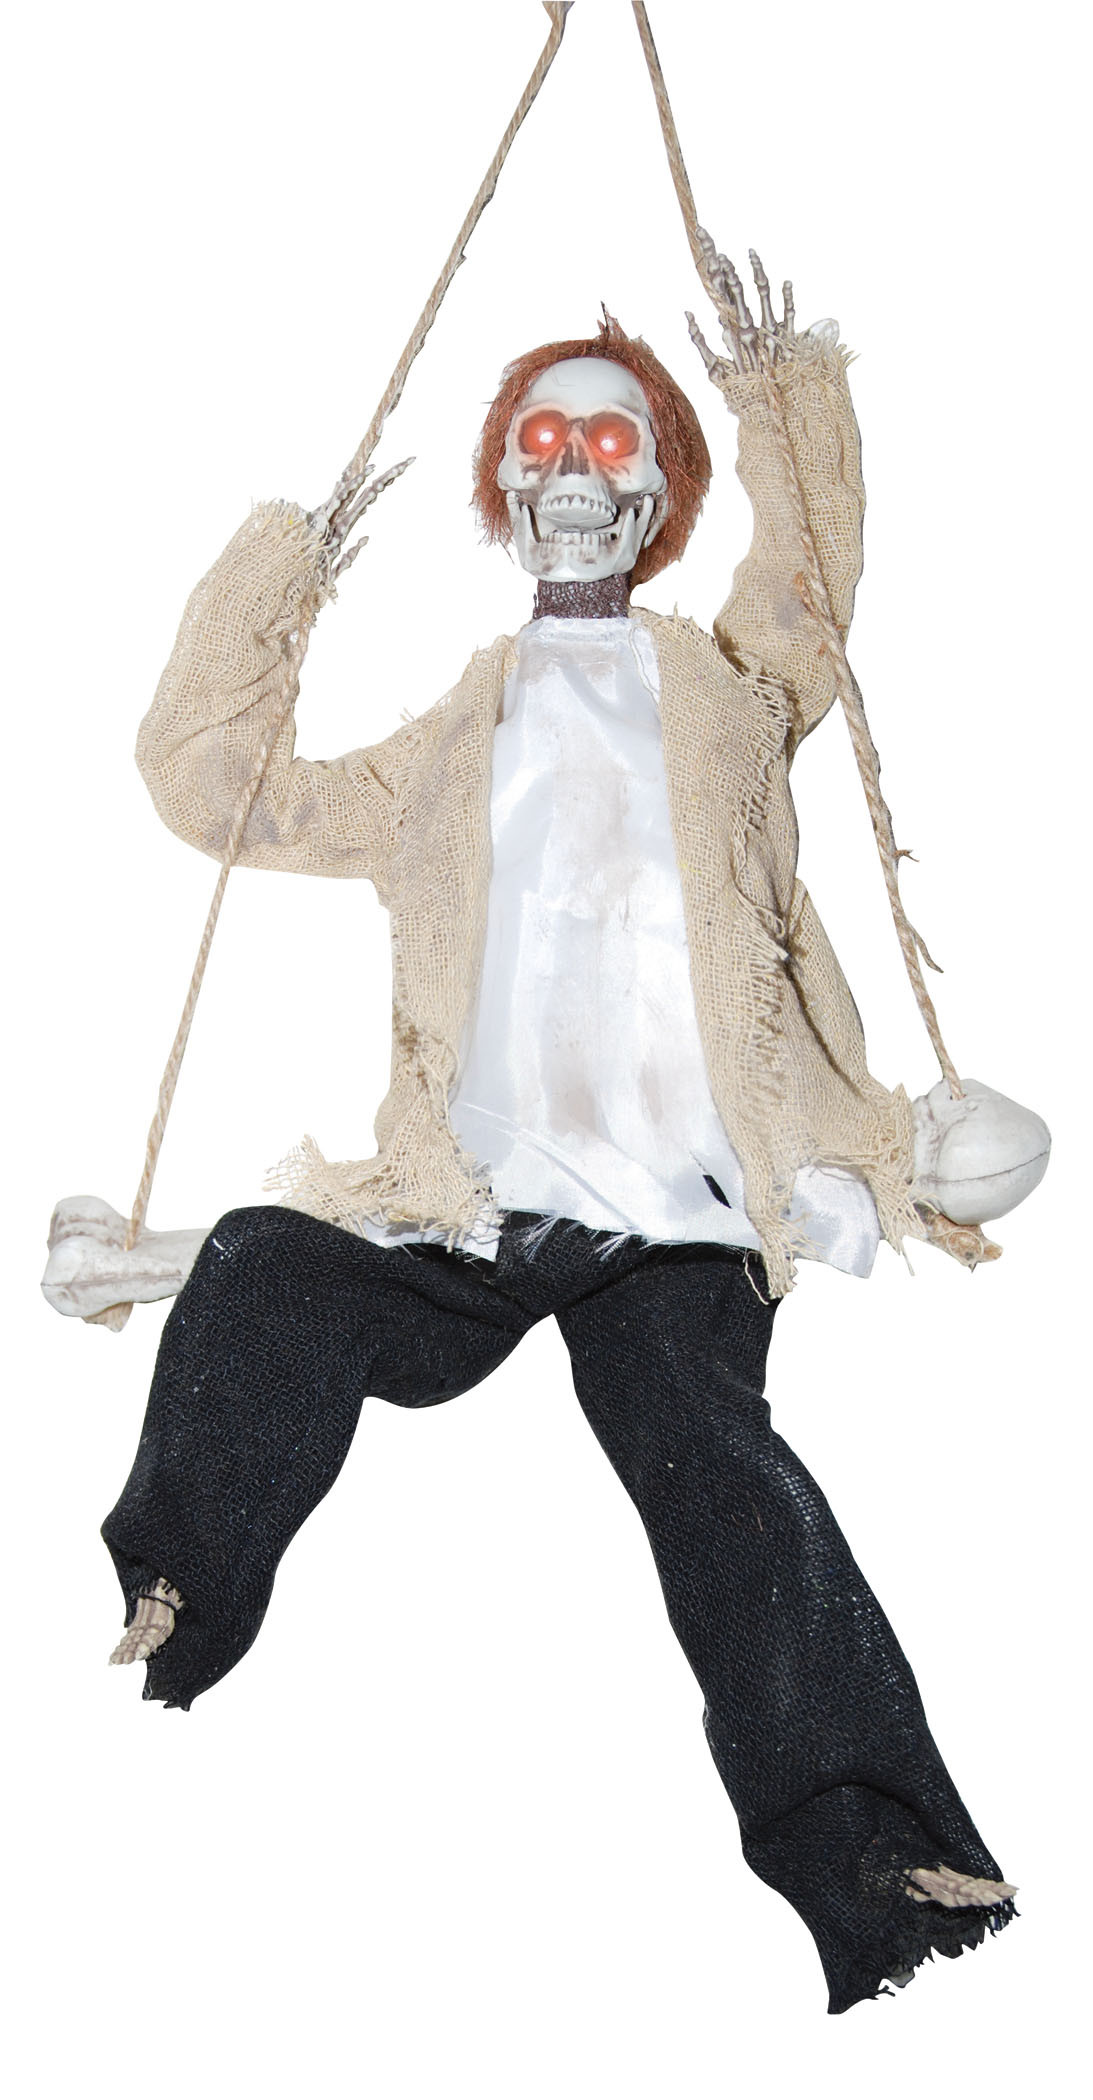 Swing Halloween Decoration
 17" Hanging Animated Swinging Reaper Skeleton on Swing